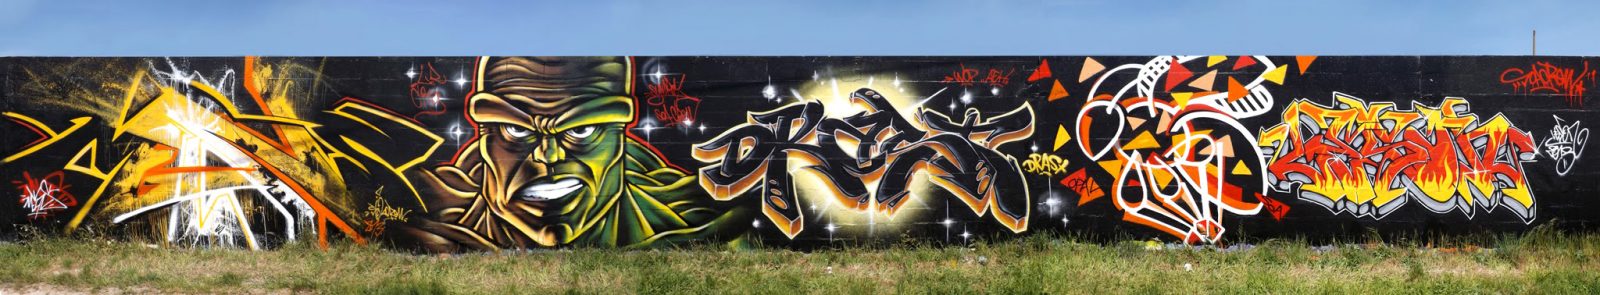 Graffiti à DBMA avec le SOA crew - 2013